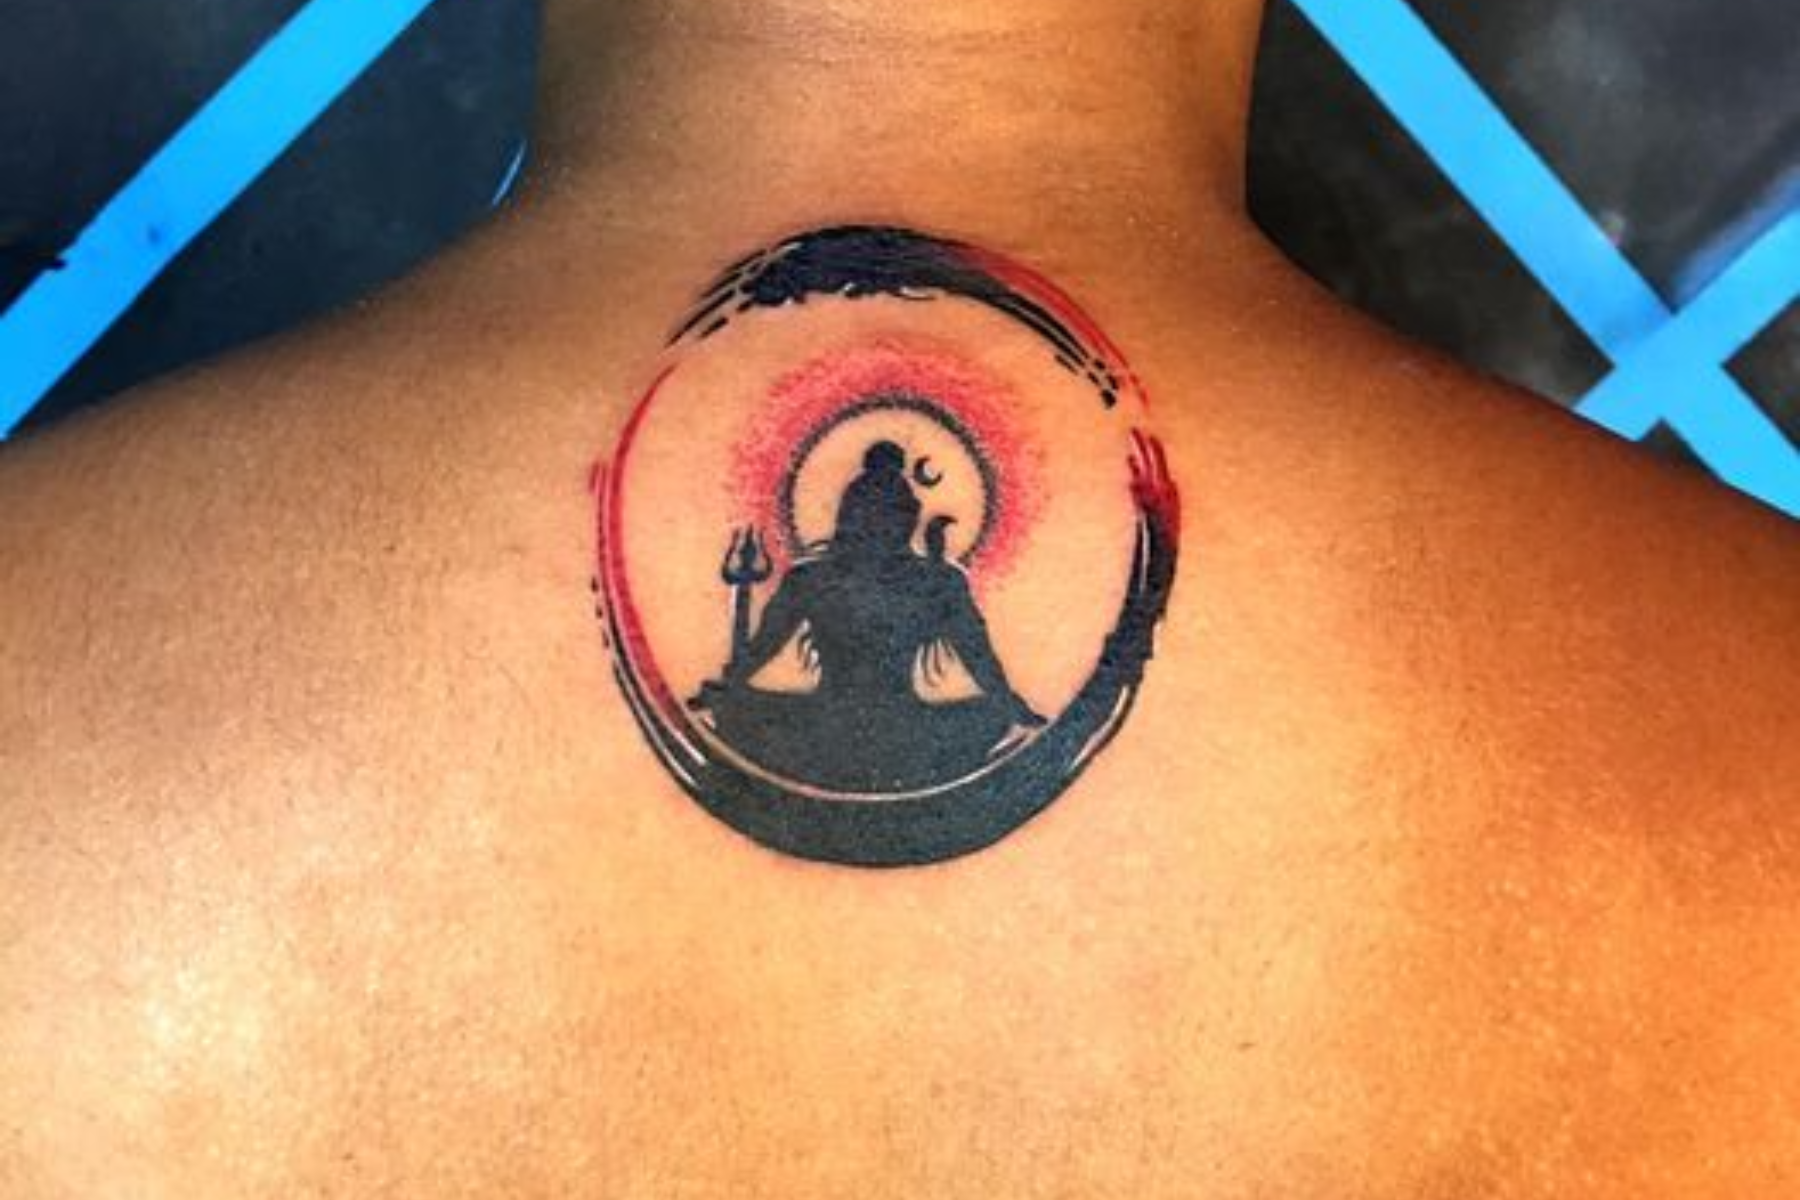 A man has a meditating woman tattoo on his upper back